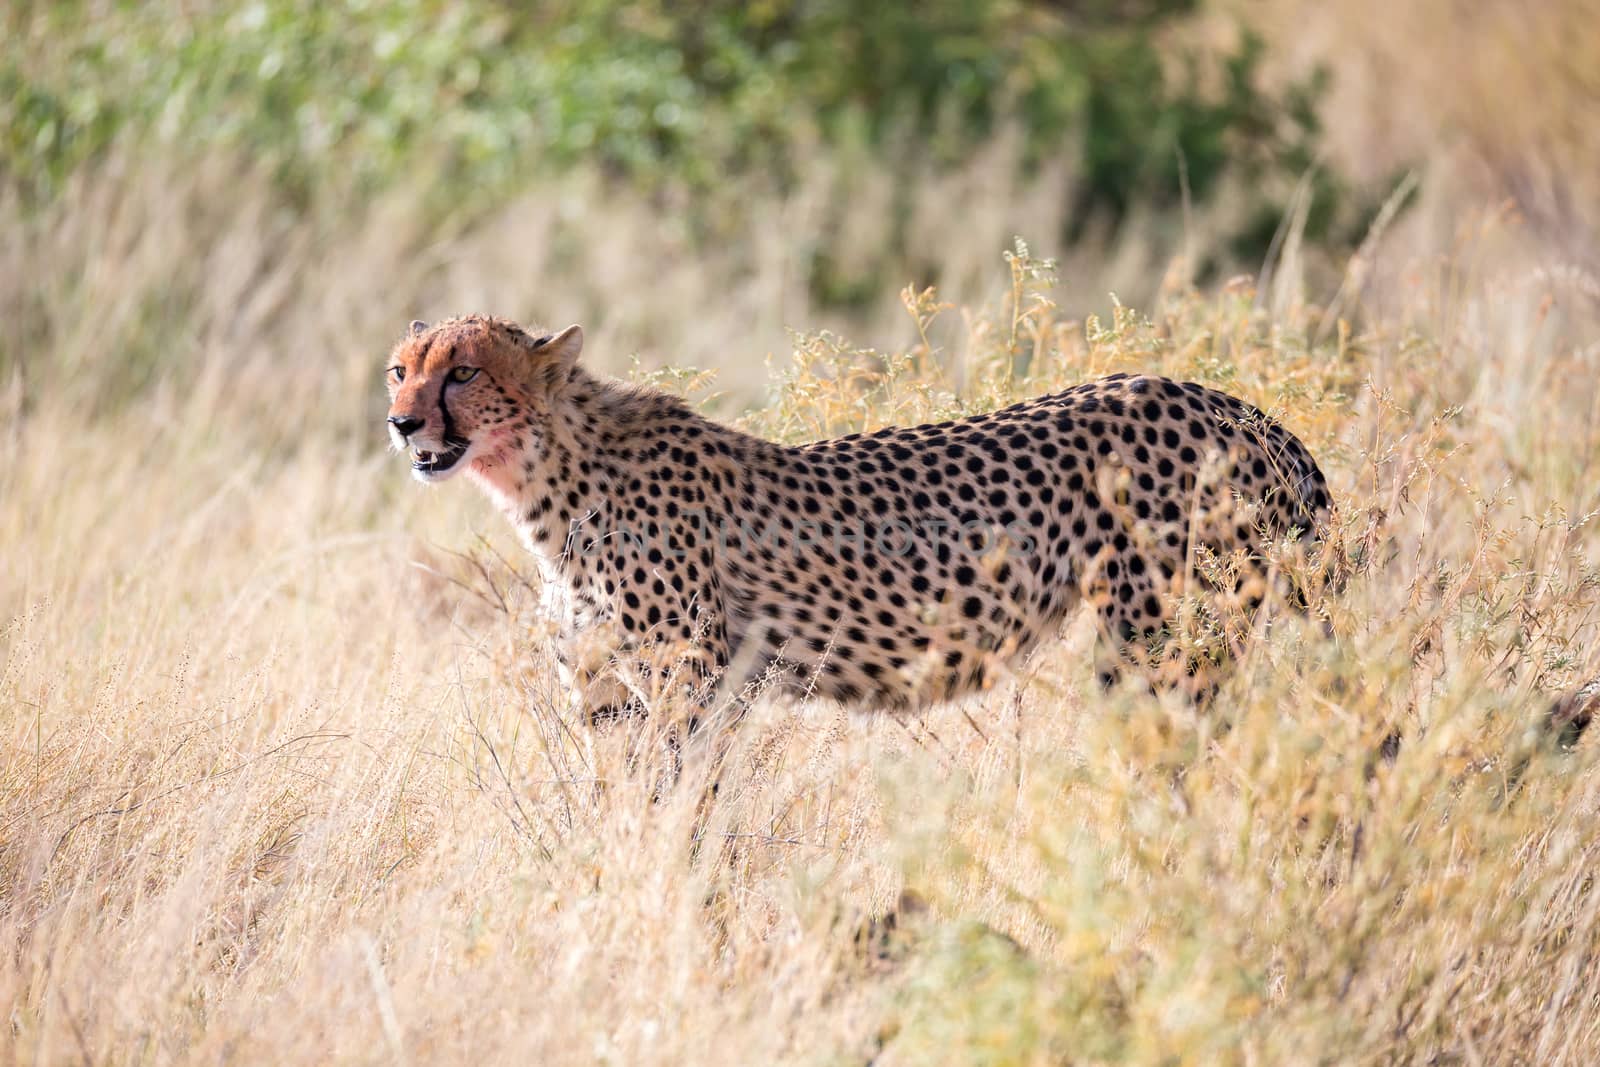 A cheetah in the grass in the savannah by 25ehaag6